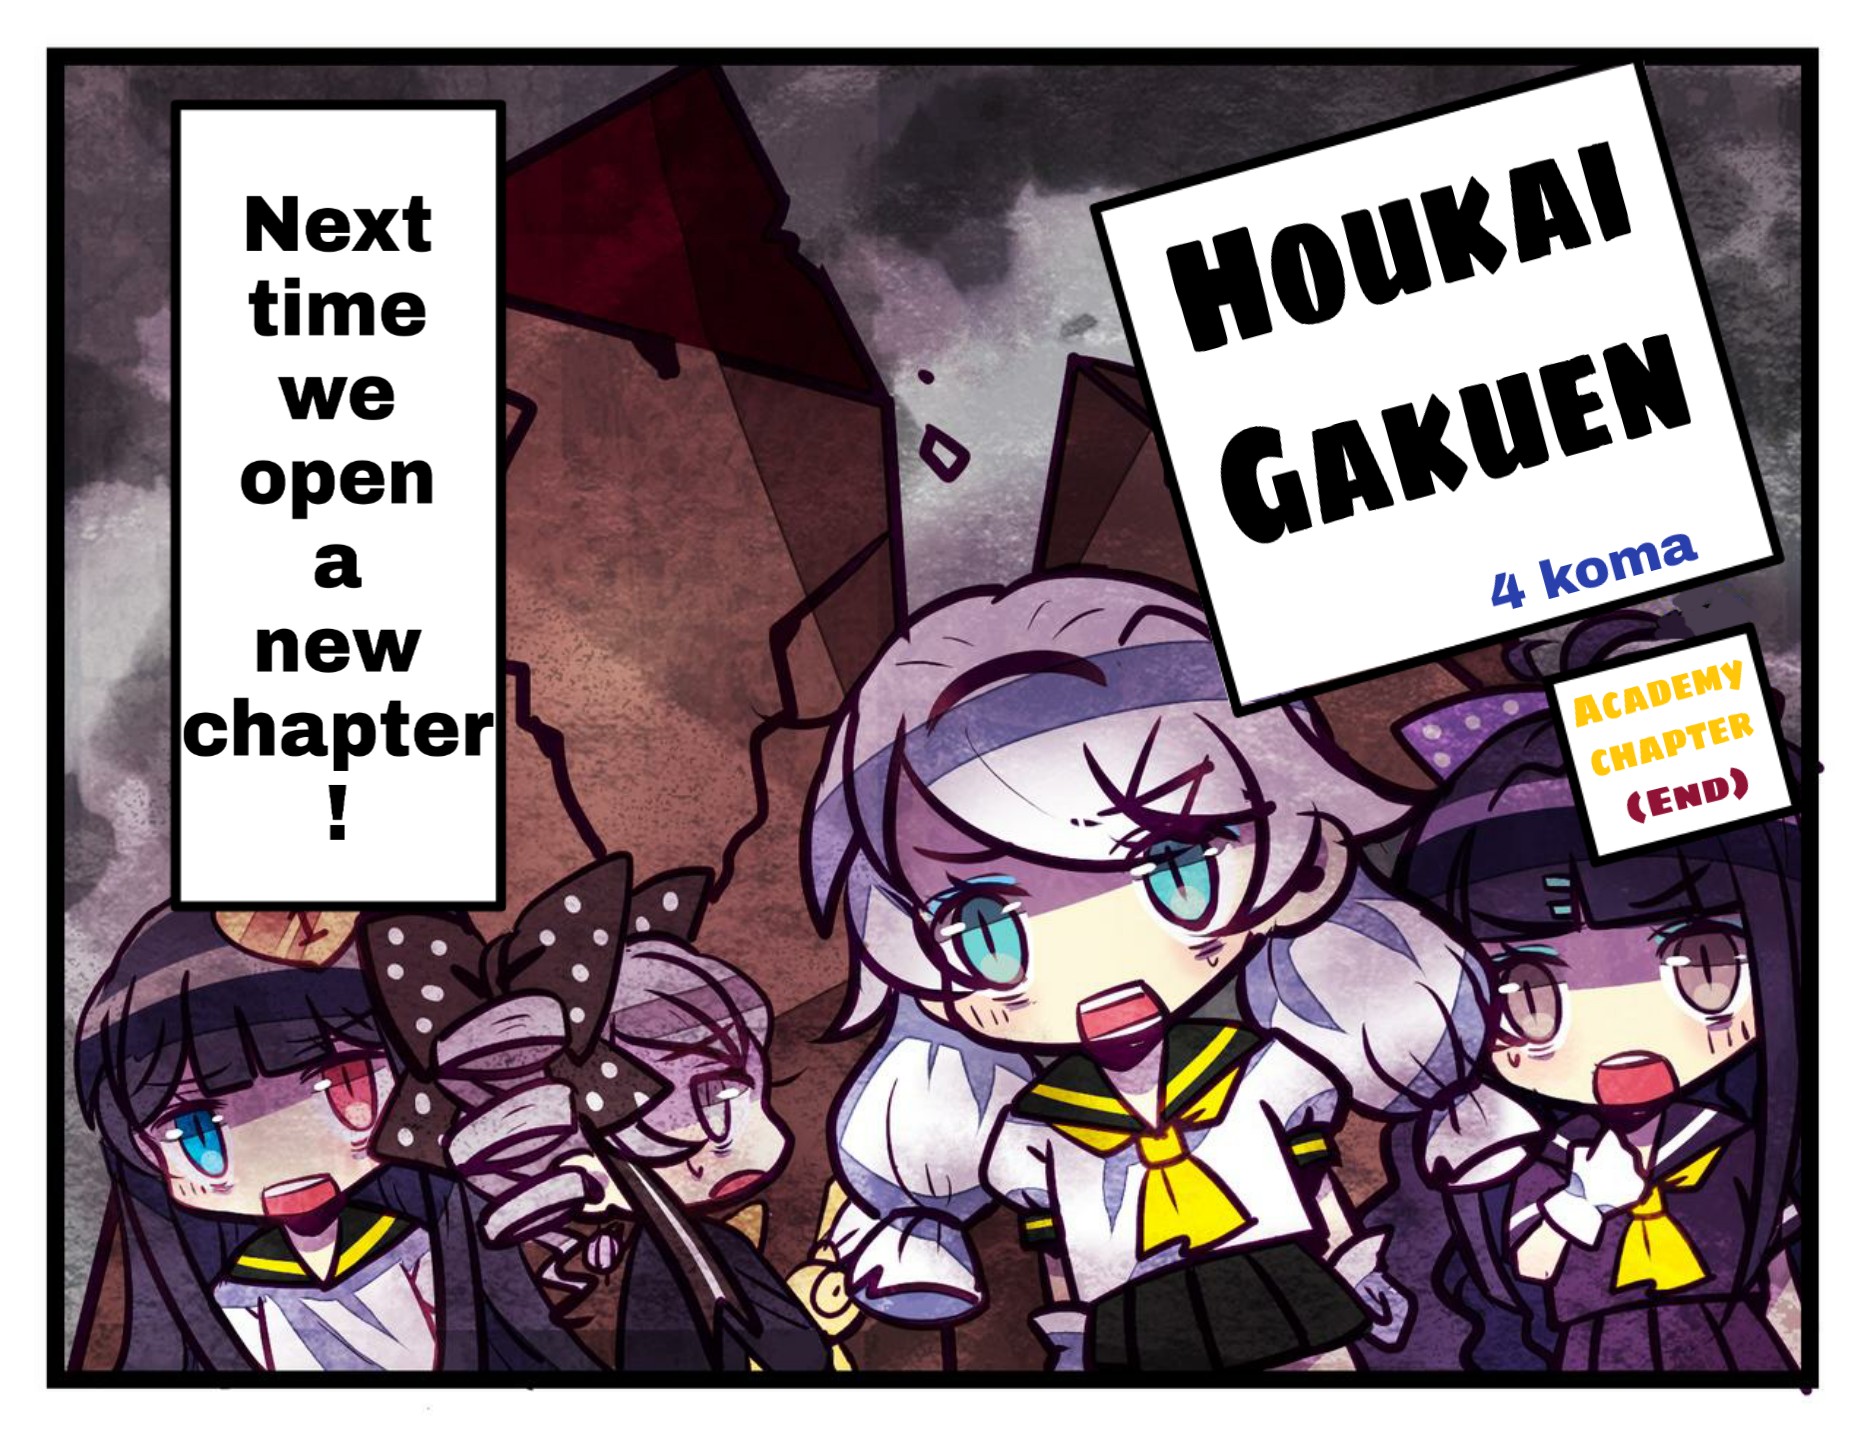 Honkai Gakuen 4 Koma Chapter 14 #4